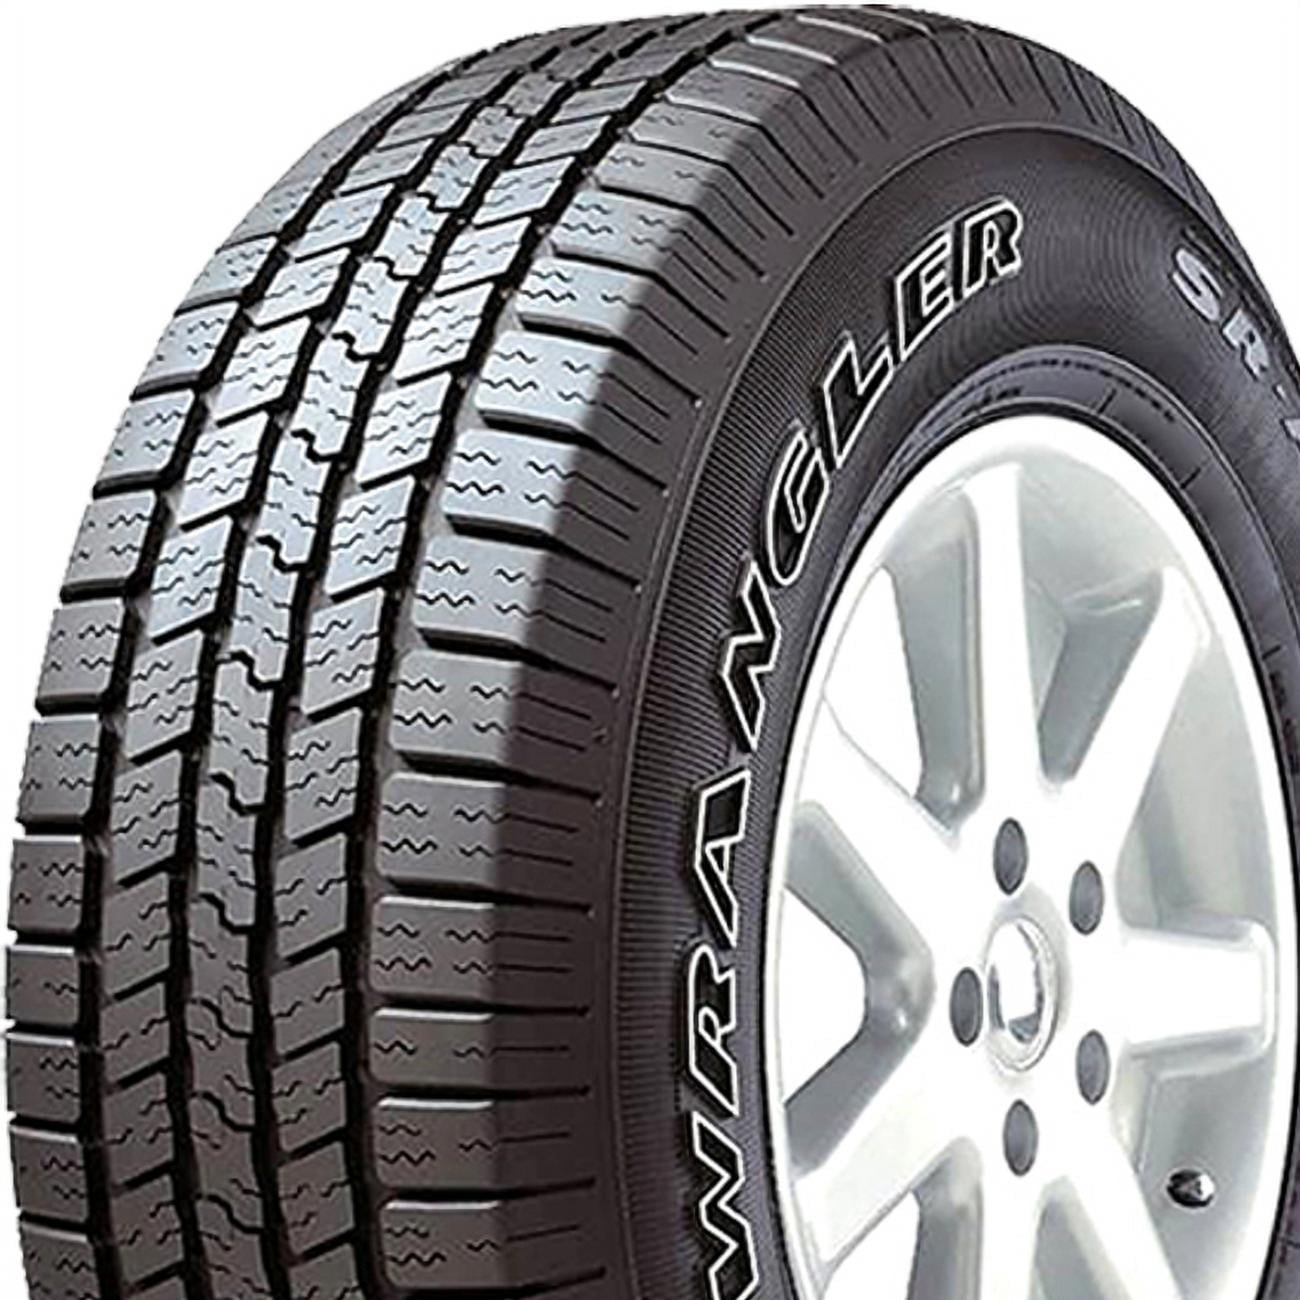 Goodyear Wrangler SR-A All-Season P265/70R17 113R Tire 